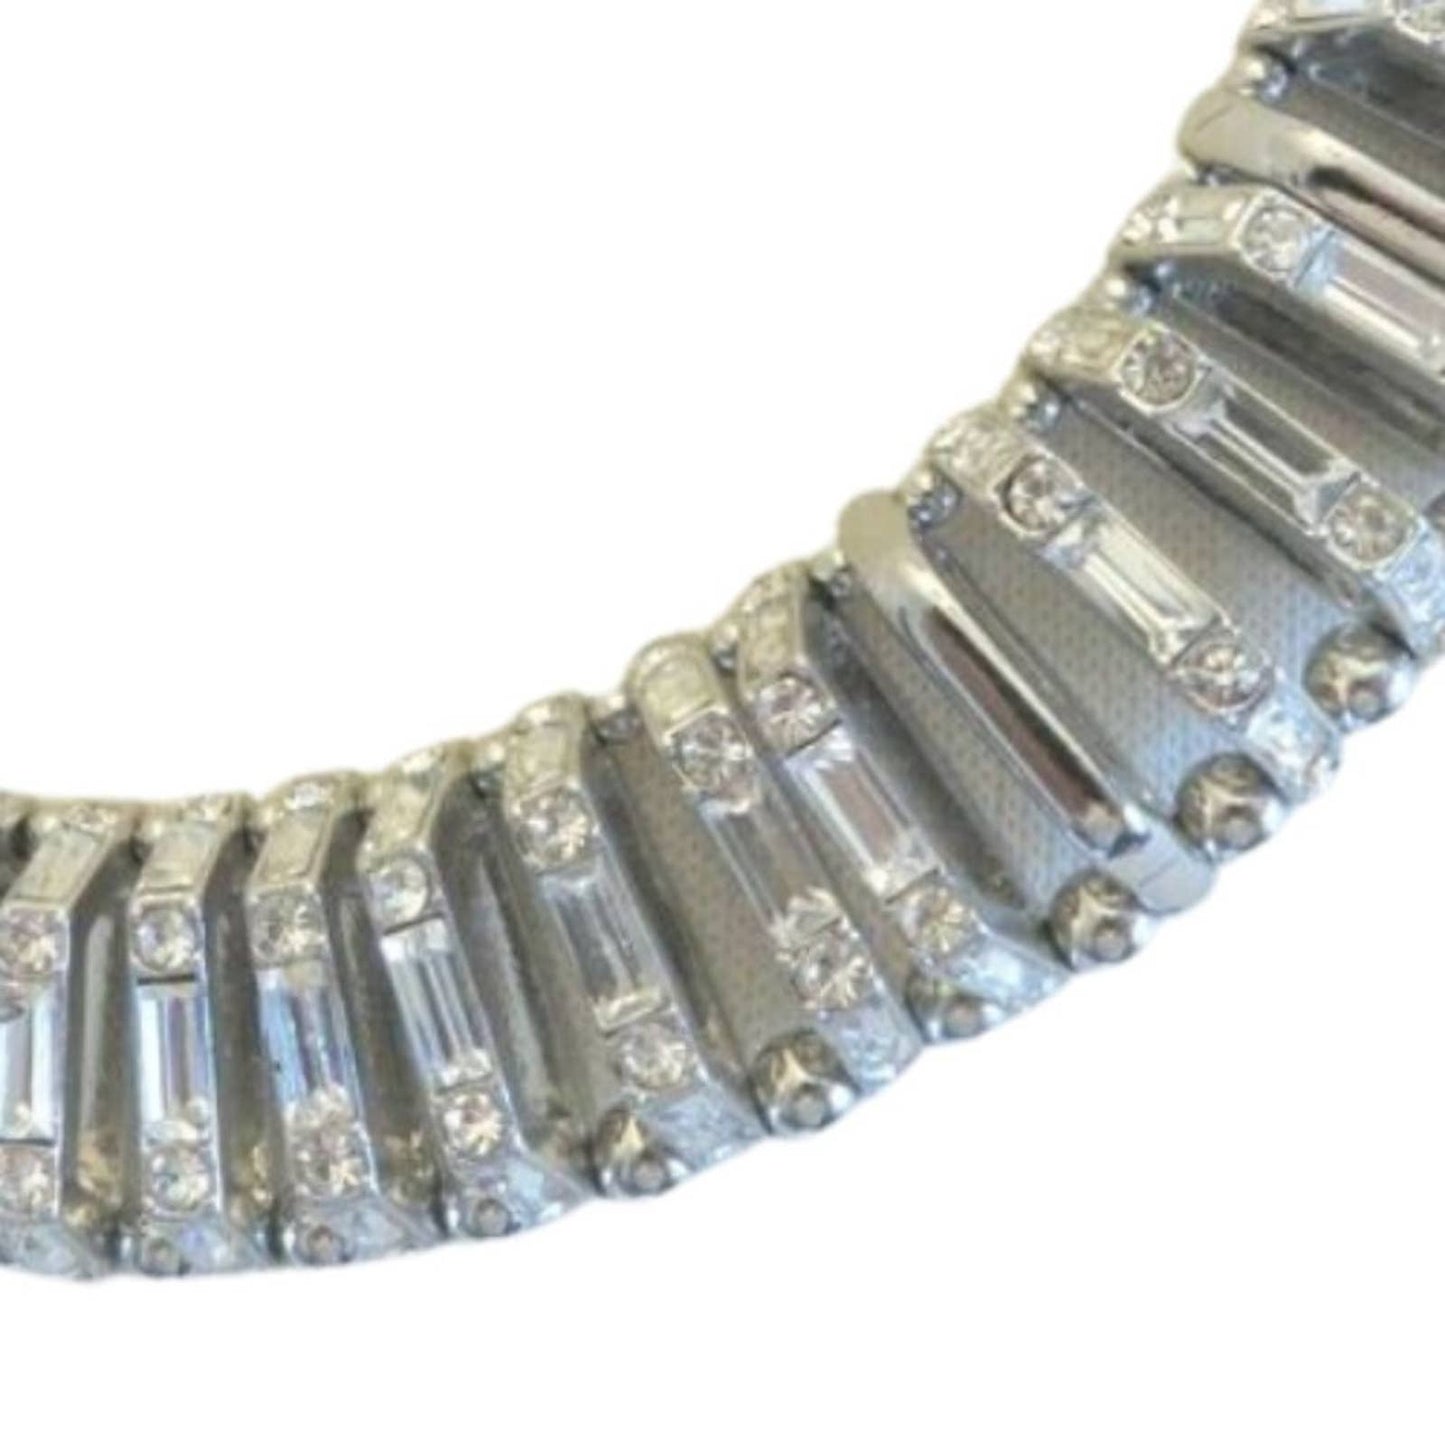 CHICOS "KIMMI" Necklace 18-22 inch Rhinstone NWT